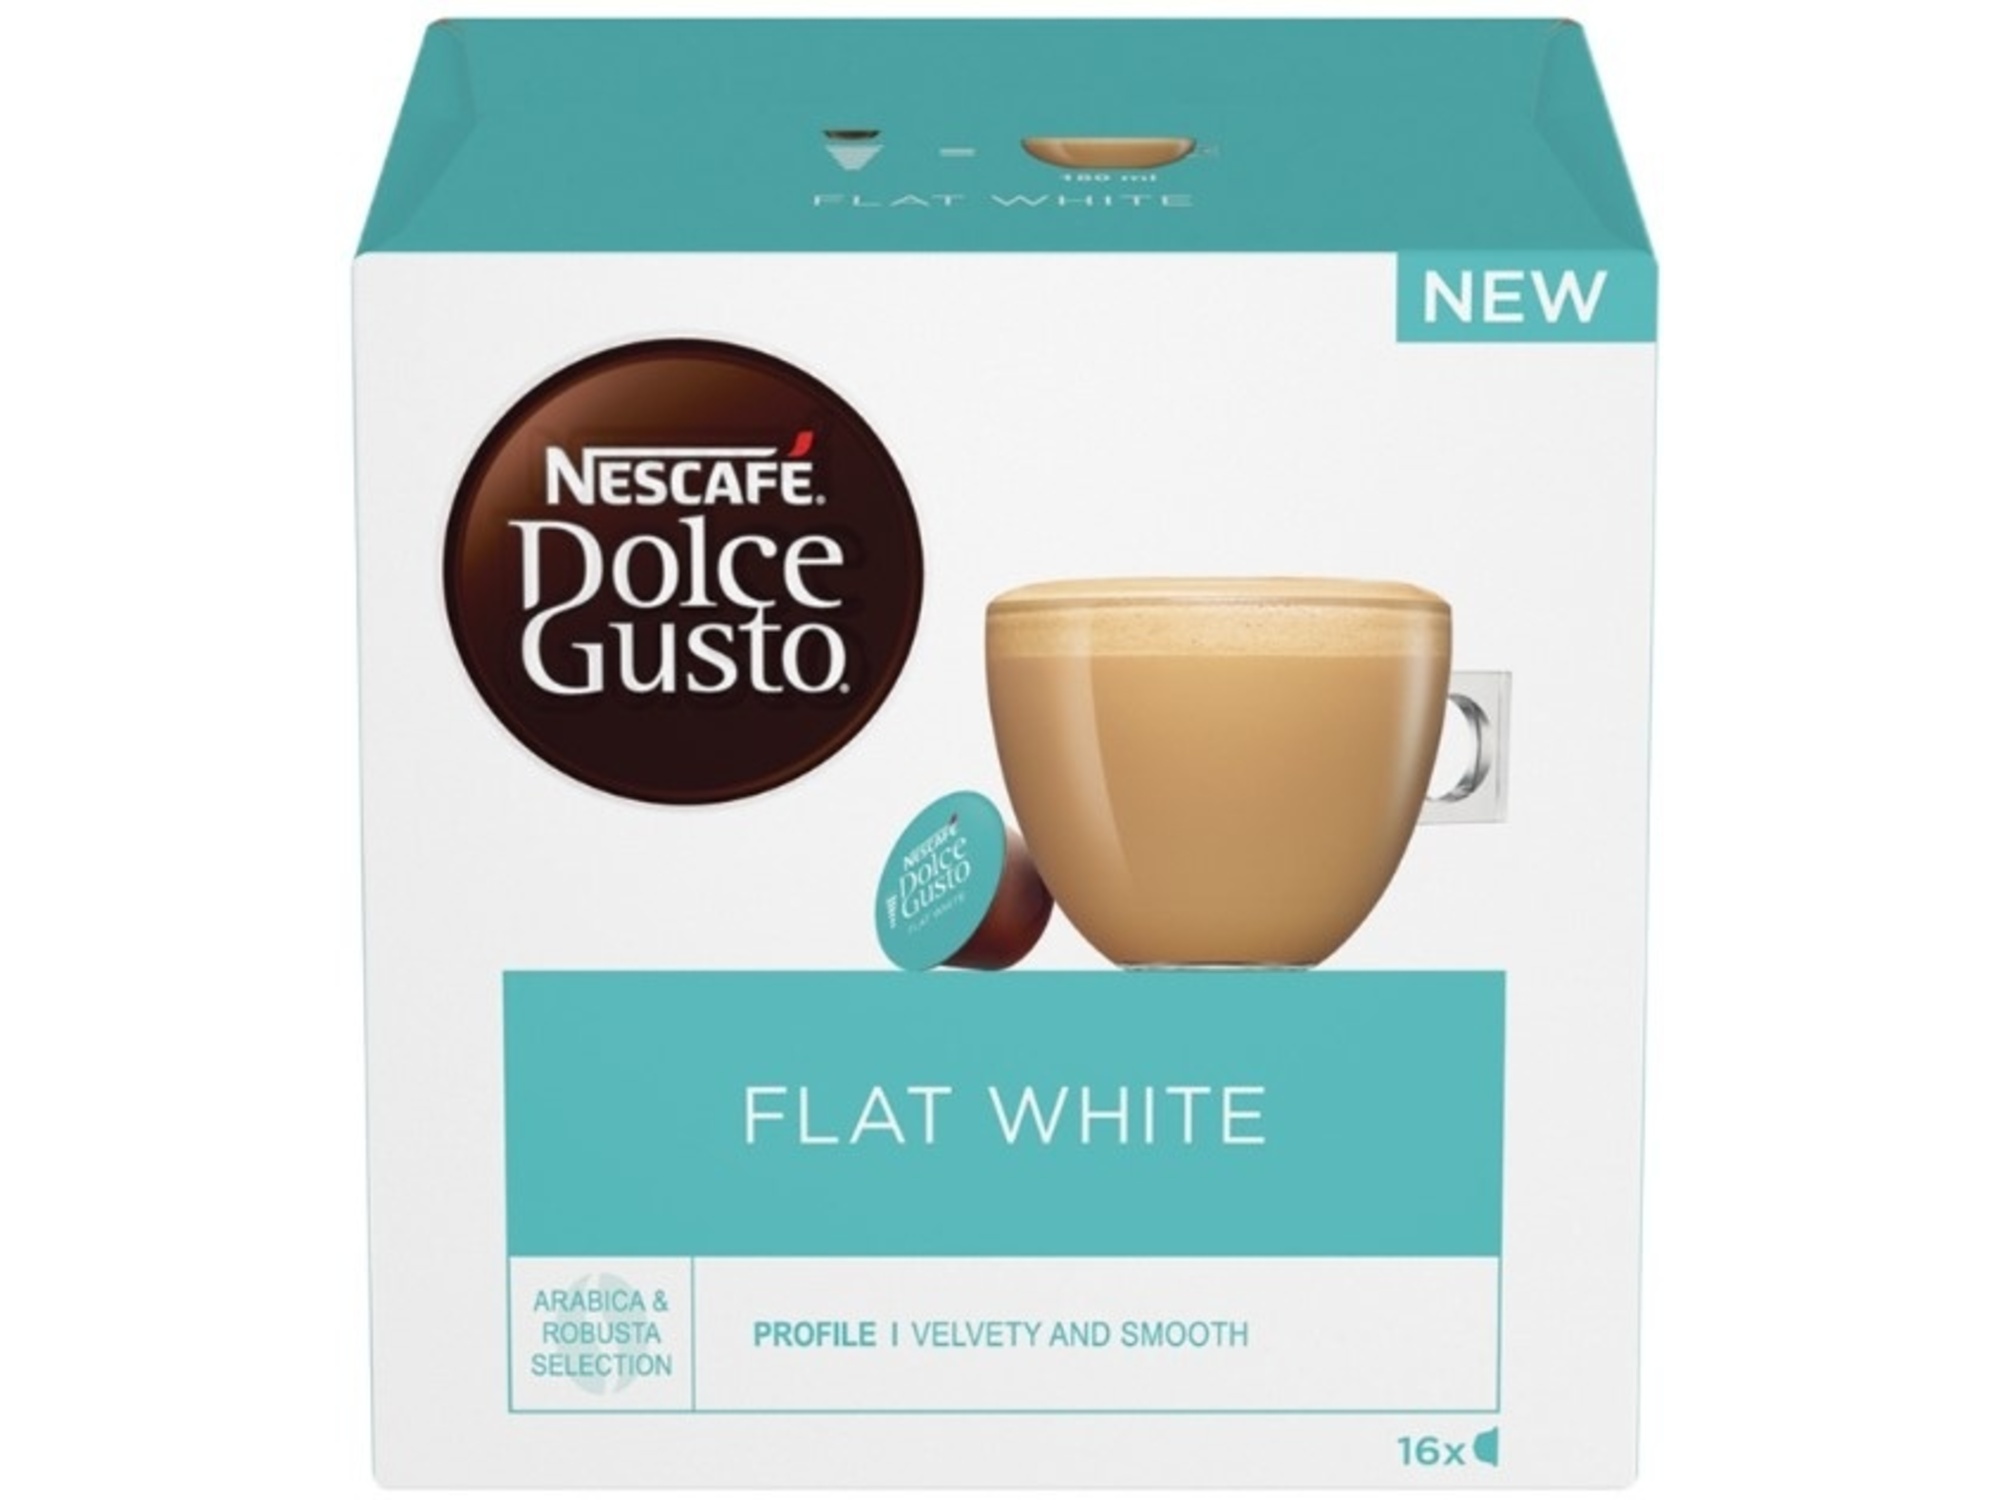 Nescafe Dolce Gusto Kafa Kapsule Flat White 16cap 160g